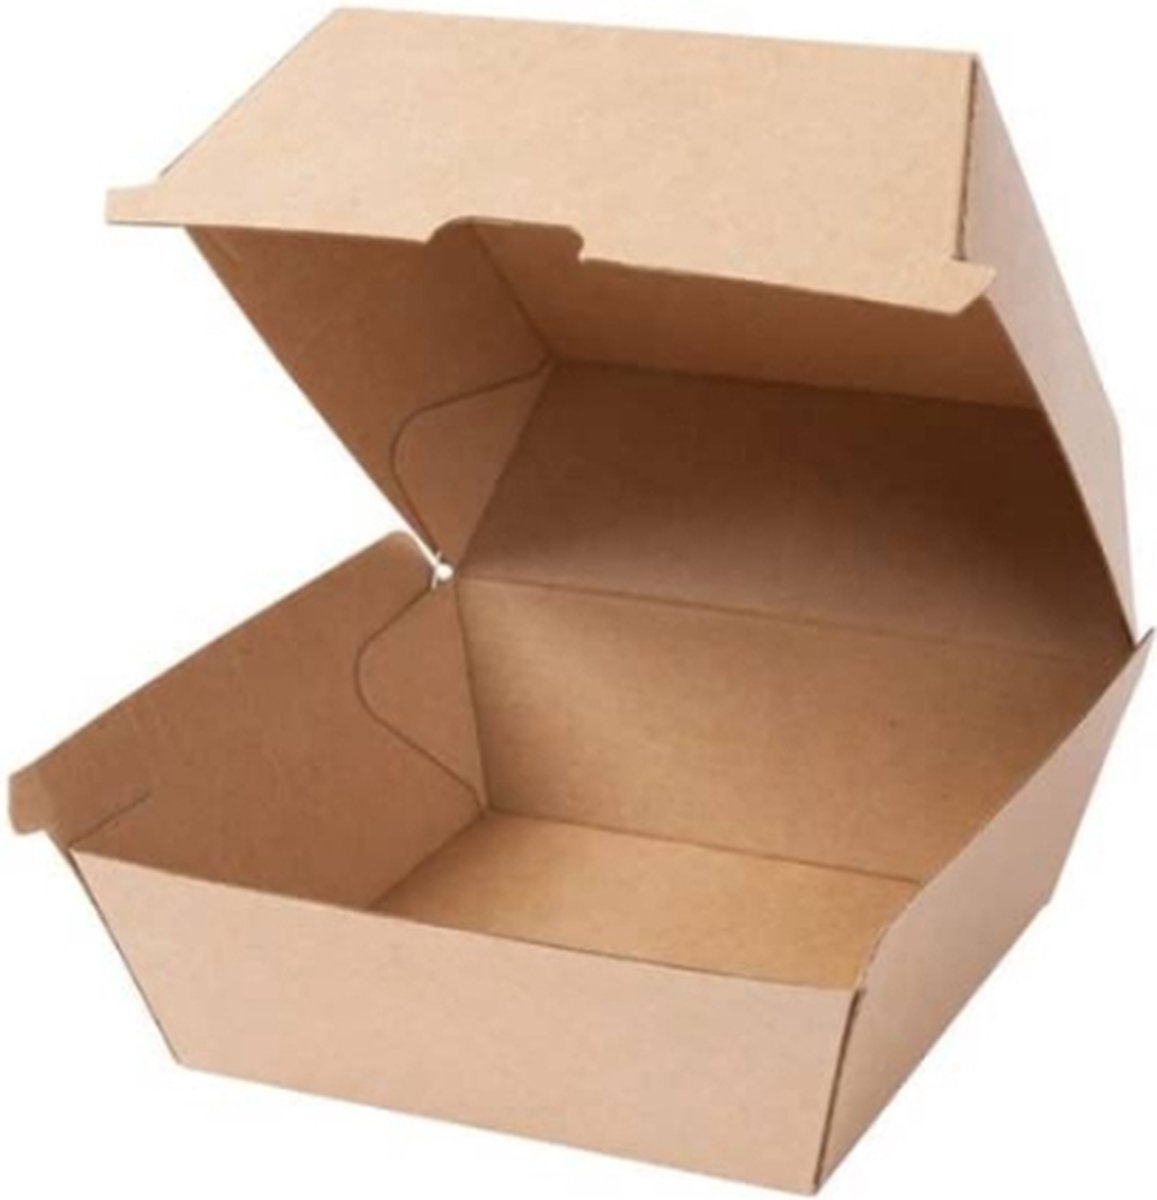 KURTT - 100 Stuks Kartonnen Sandwich Box - Kartonnen Sandwichbox - Sandwich doos - Hamburger box - Papieren lunchbox - kartonnen doos - hamburger - BIO - broodjeszaak - milieuvriendelijk - wegwerp - food verpakking - Maat M